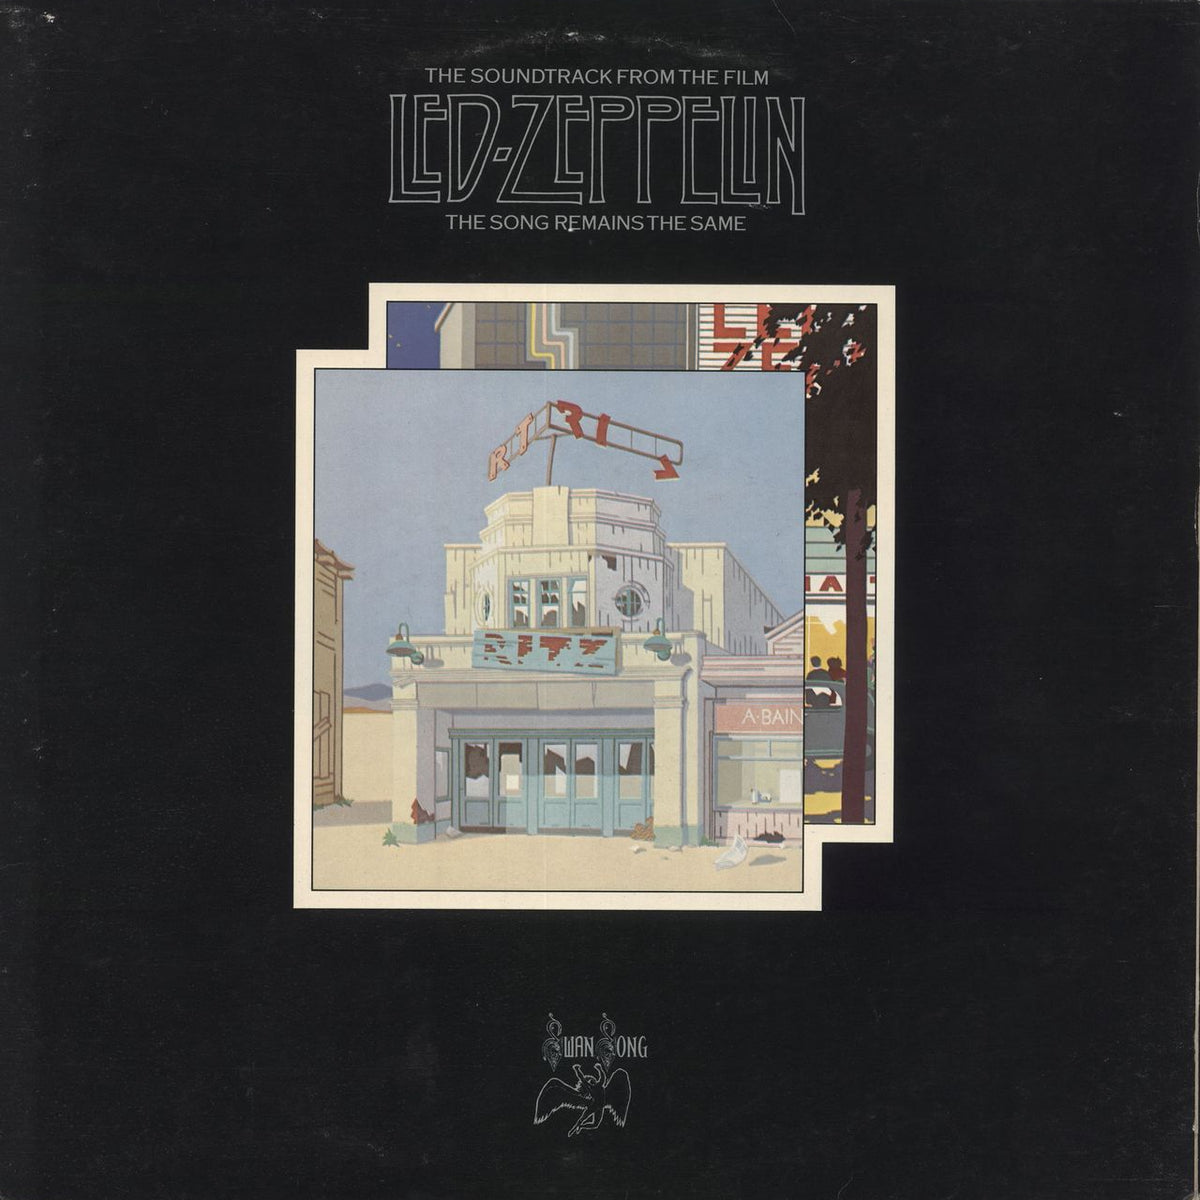 Led Zeppelin The Song Remains The Same - 1st - EX UK 2-LP vinyl set